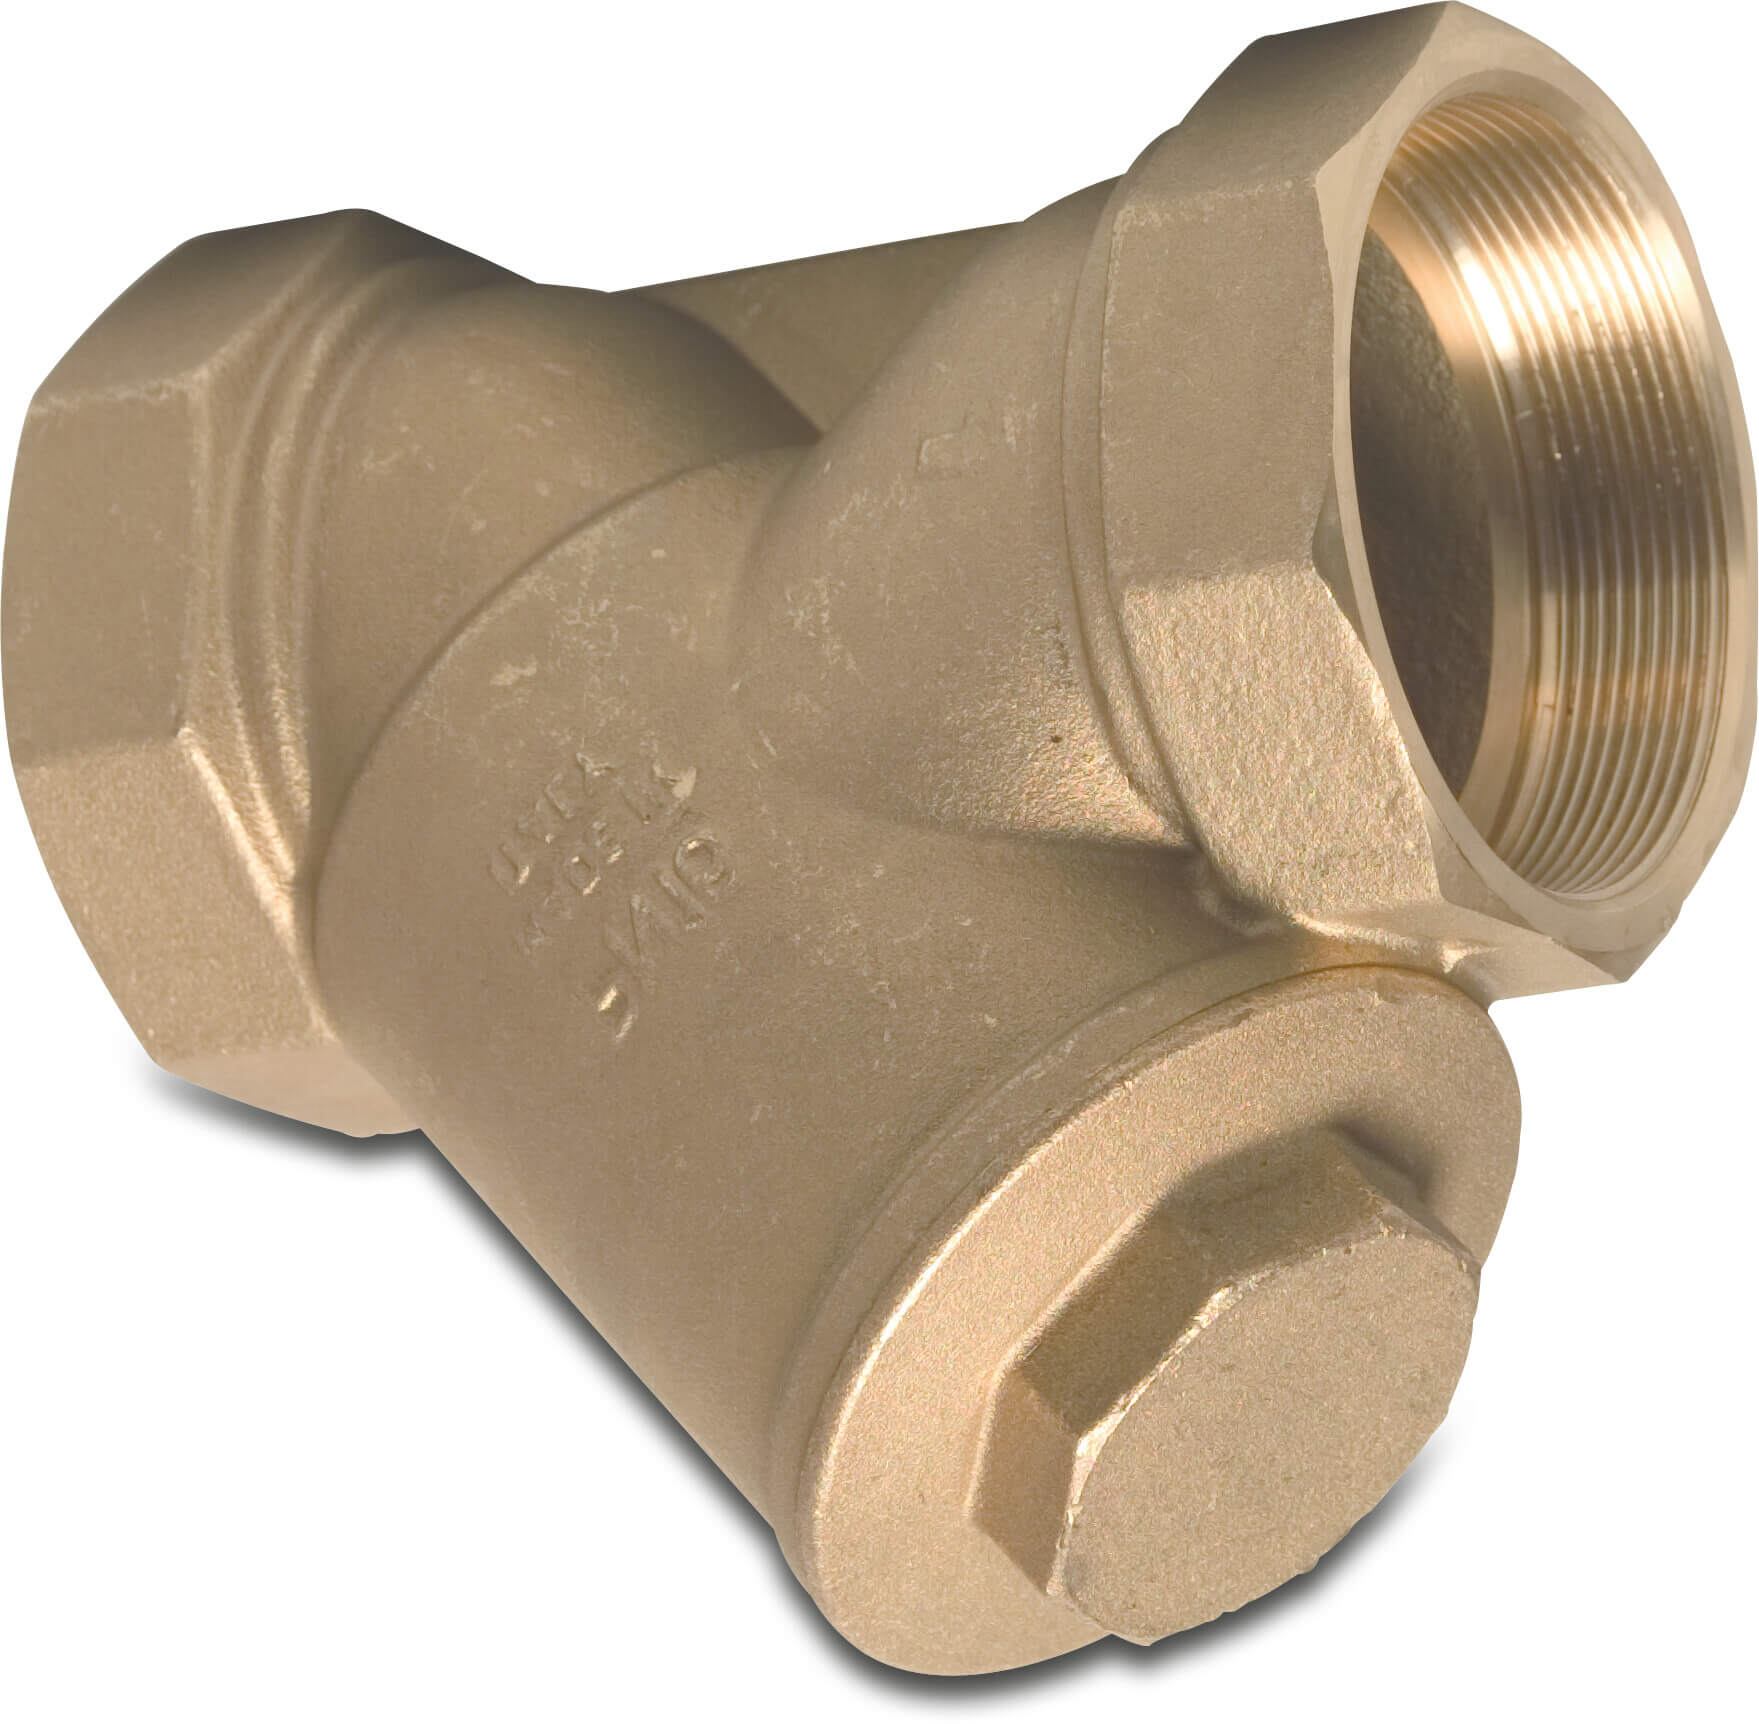 Profec Inline Filter brass 3/8" female thread 16bar 550micron stainless steel